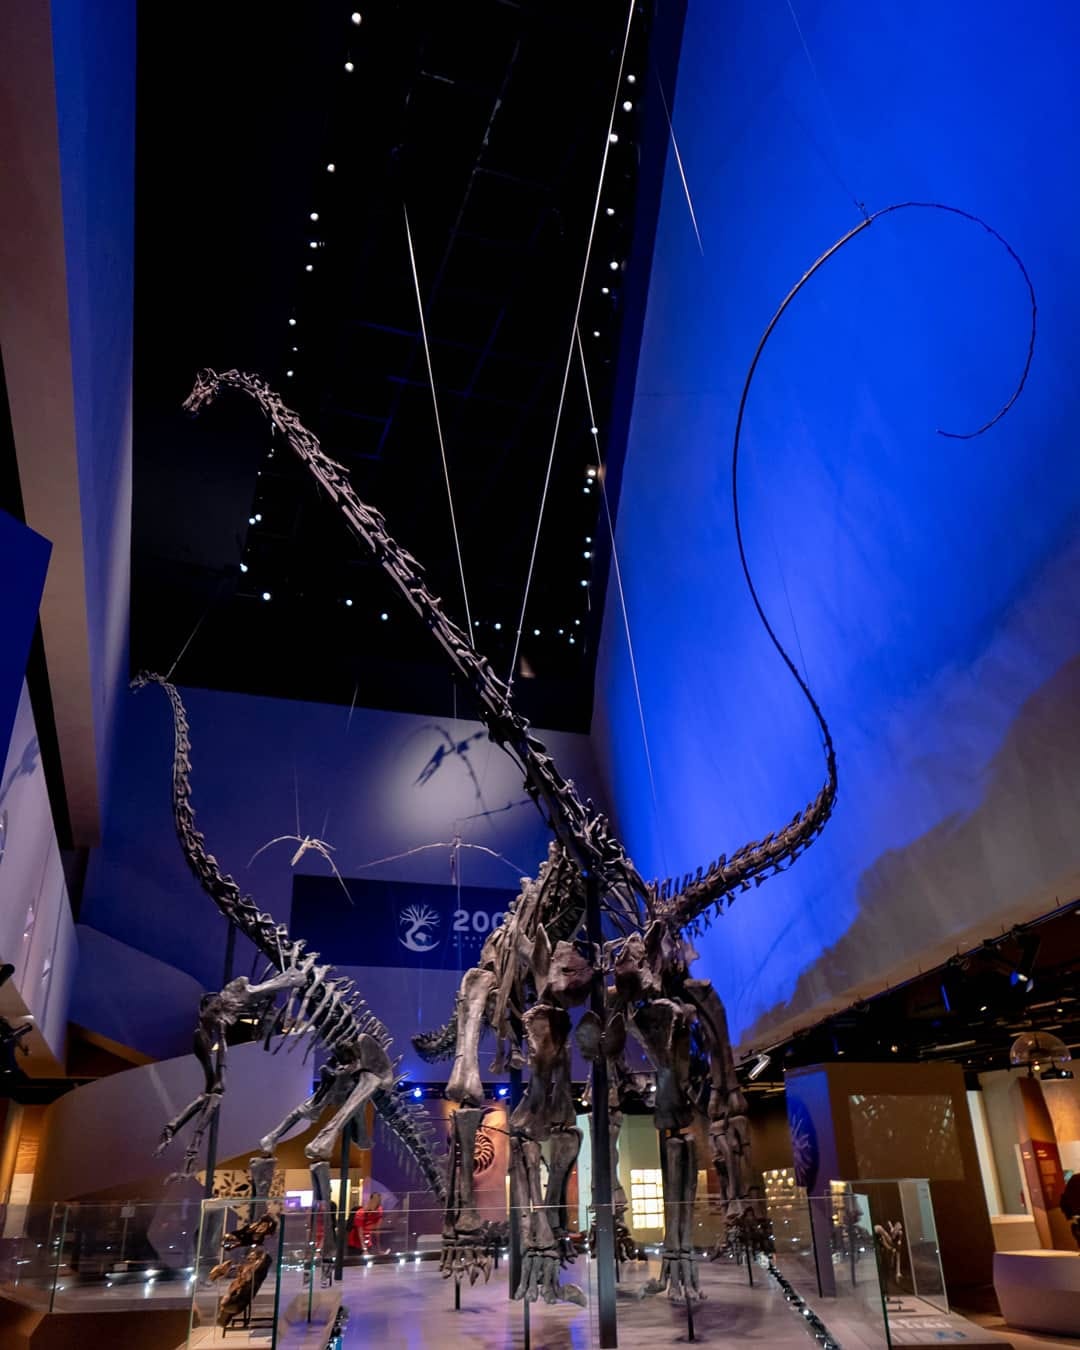 sauropod dinosaur exhibit at lee kong chian natural history museum, north west of singapore